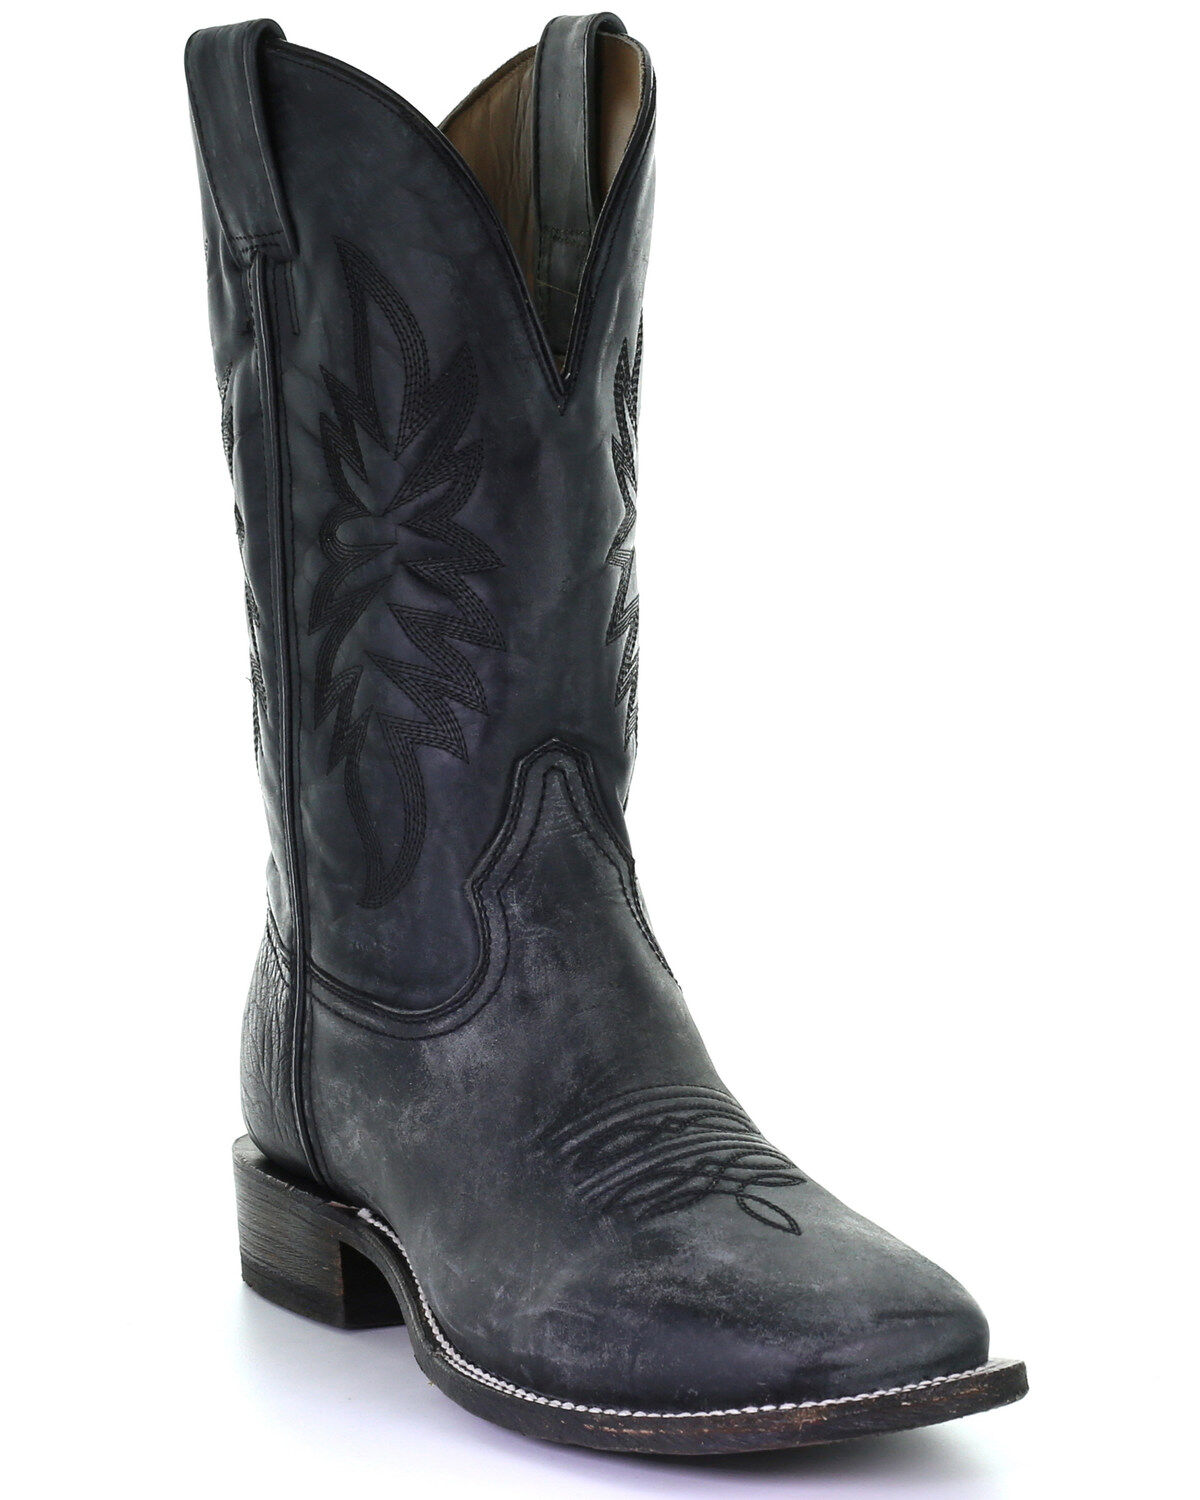 Men's Overlay Honey Stitched Leather Dark Design Cowboy Boots Rodeo Western